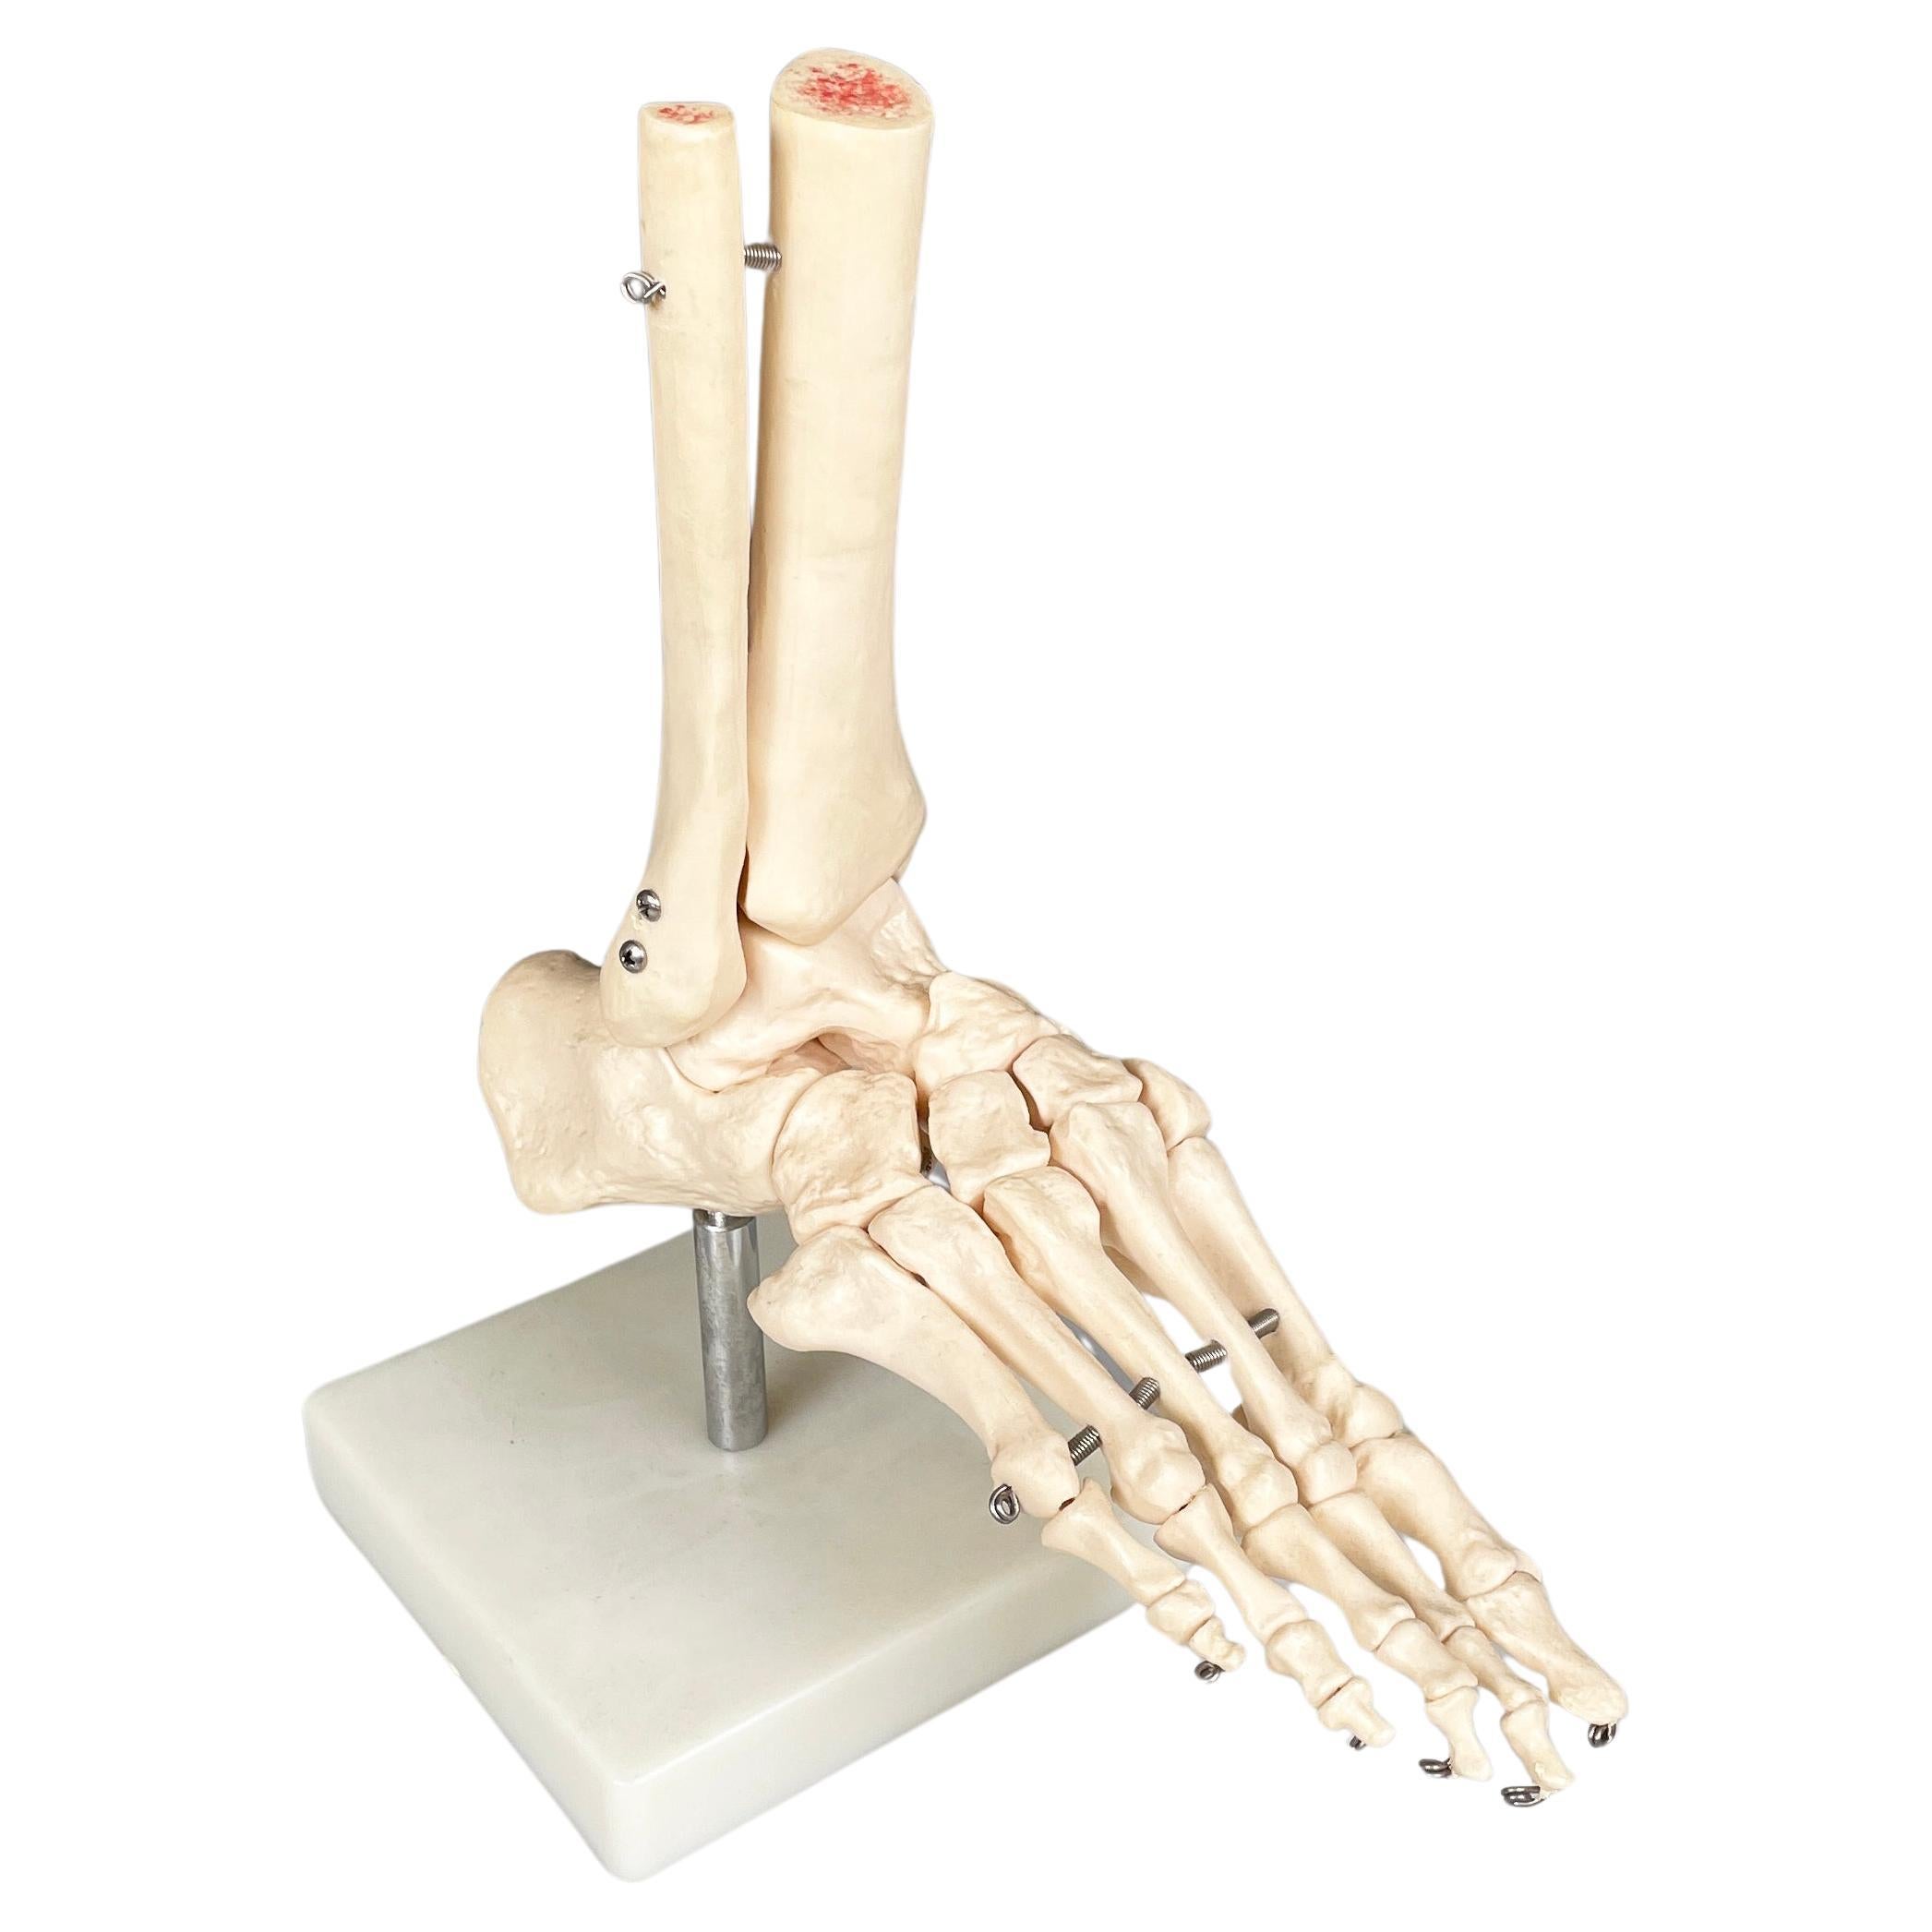 Italian modern Scientific anatomical model of the foot bones in plastic, 2000s